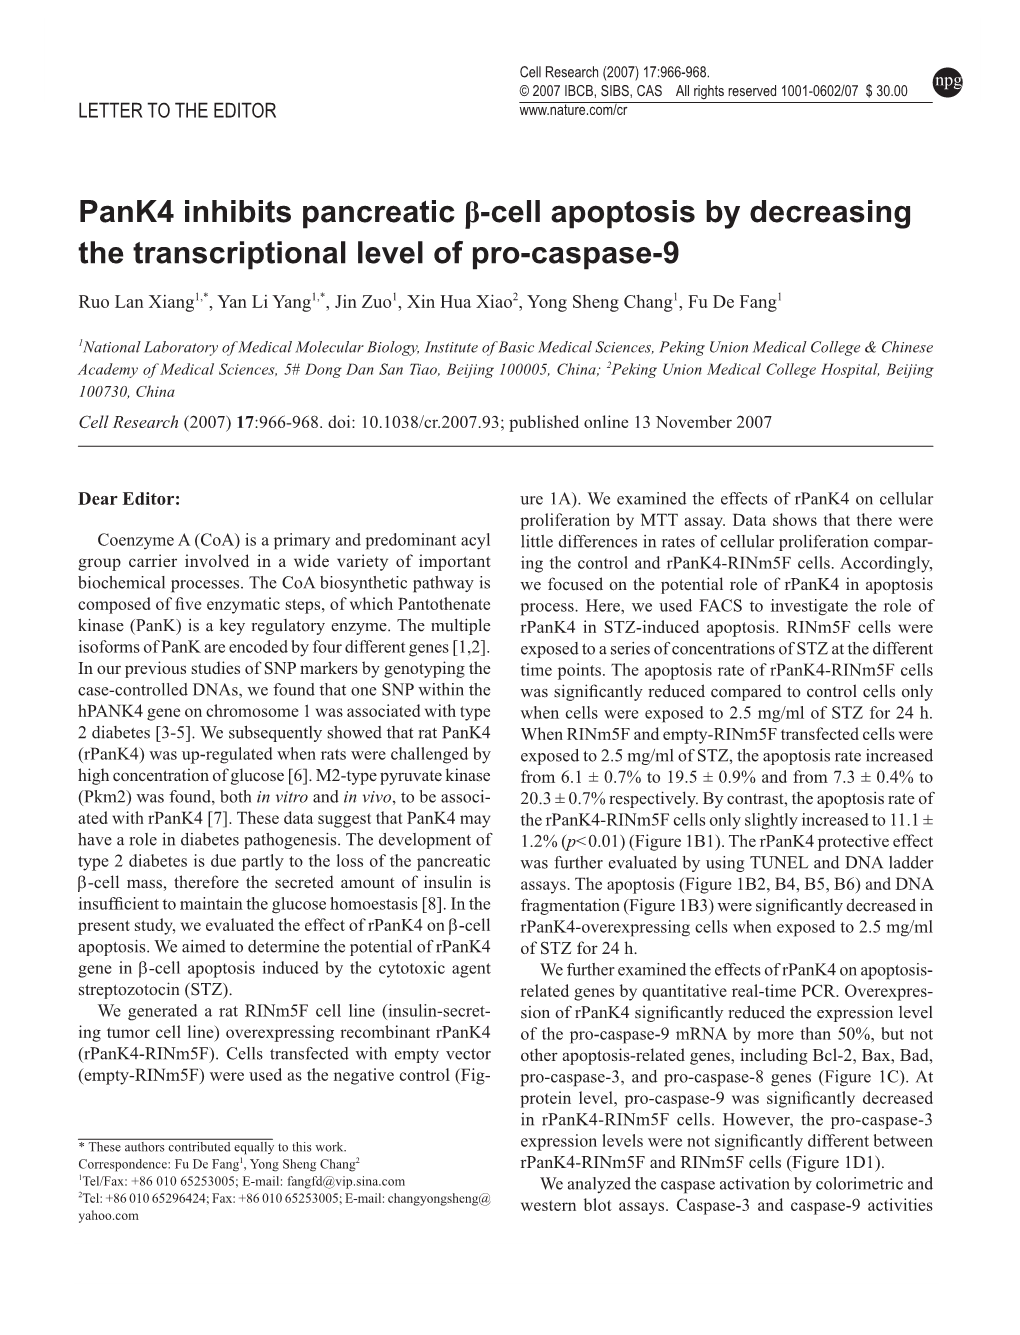 Pank4 Inhibits Pancreatic Β-Cell Apoptosis by Decreasing the Transcriptional Level of Pro-Caspase-9